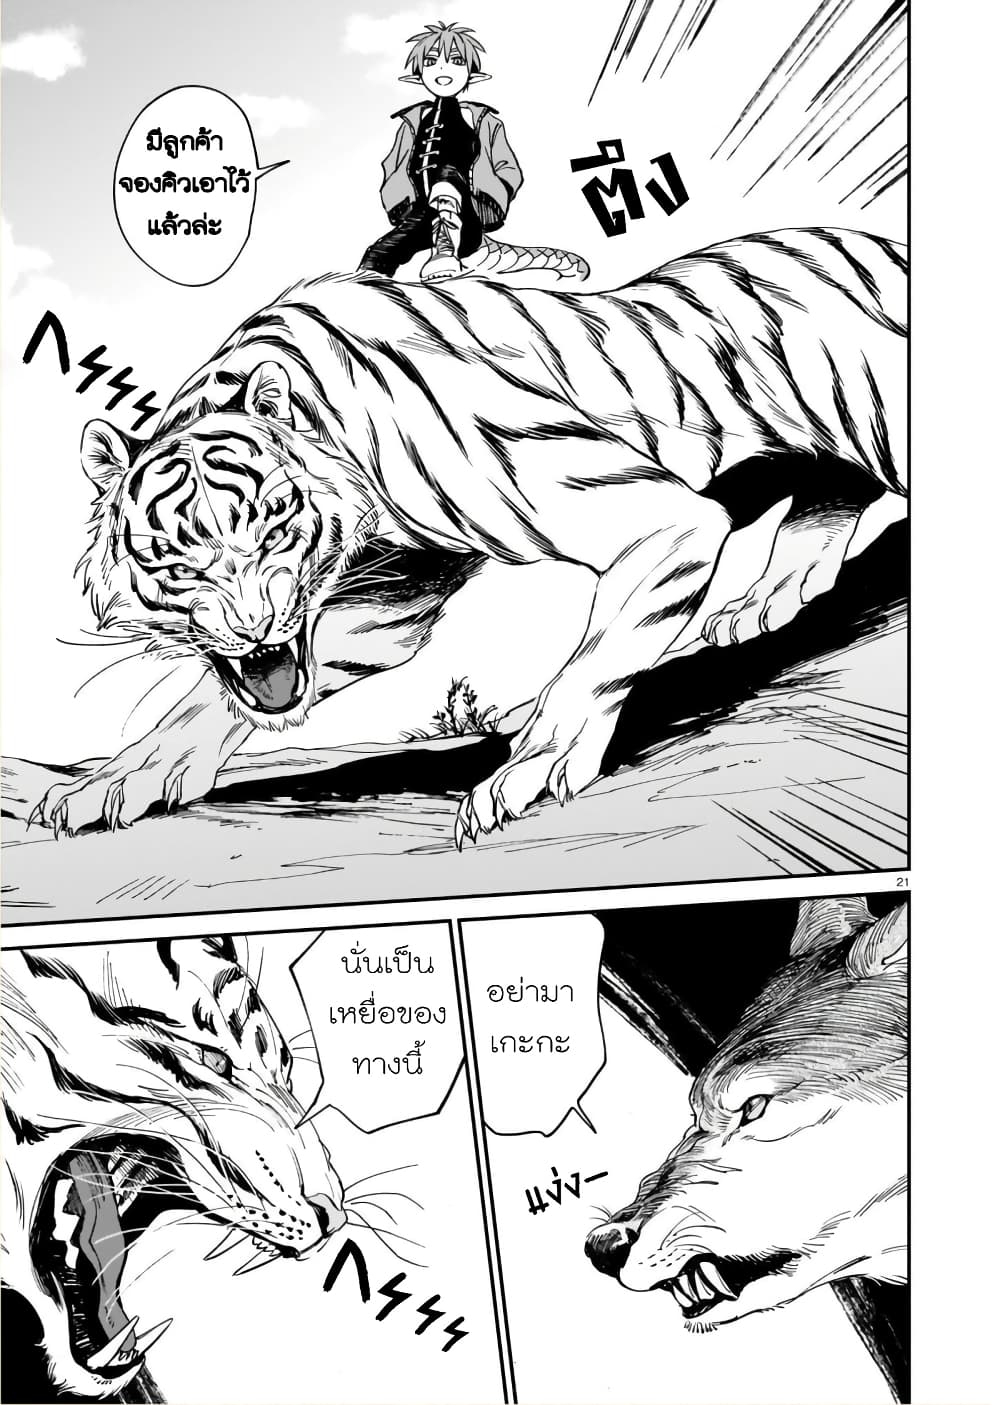 Tora ha Ryuu wo mada Tabenai โตเมื่อไร จับหม่ำ 1-เหยื่อของเสือ